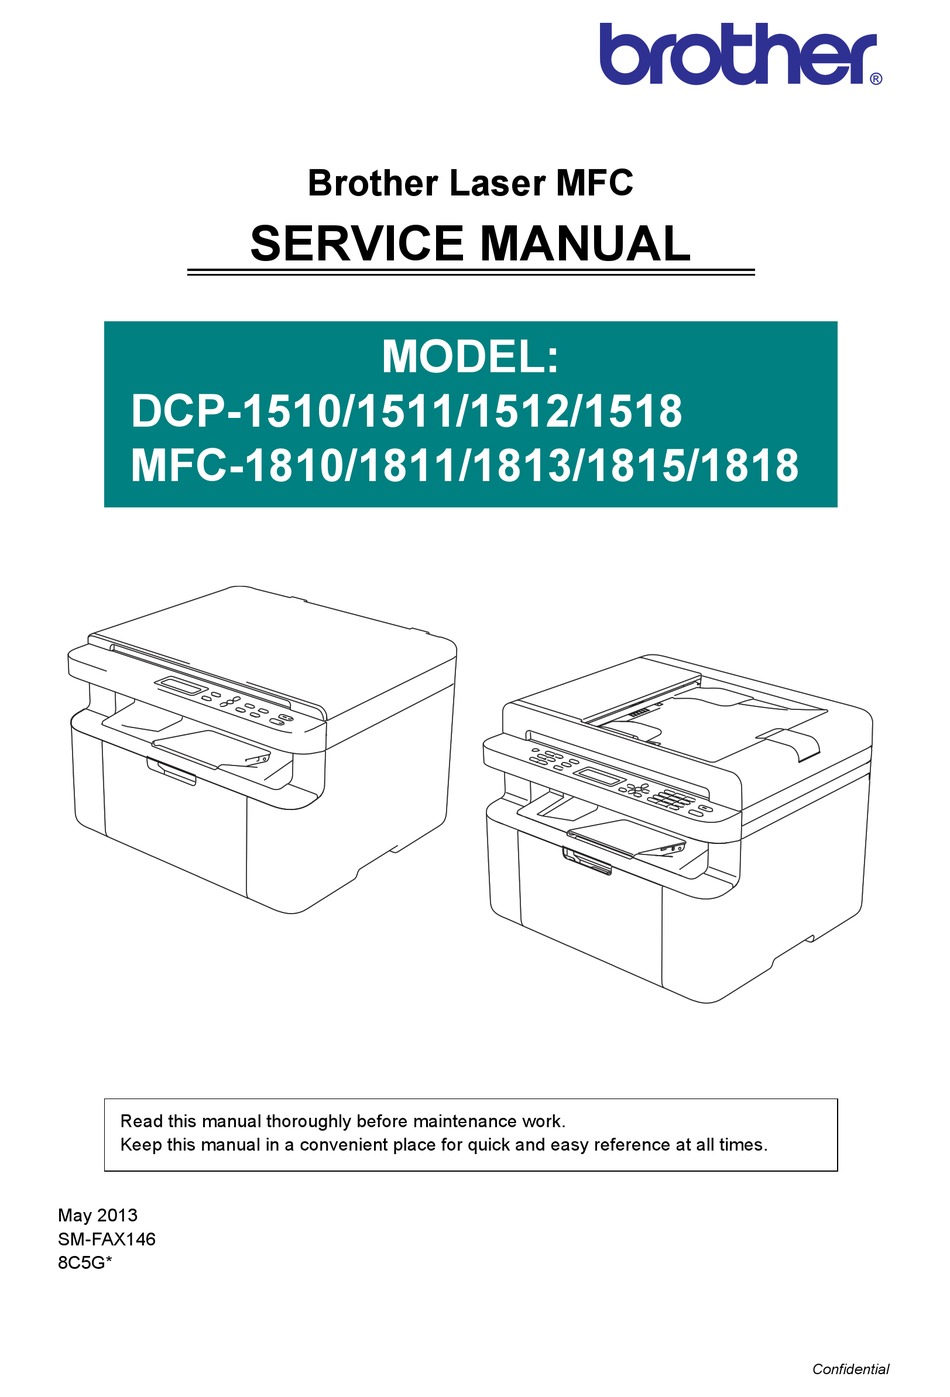 BROTHER DCP-1510 MANUAL Download ManualsLib